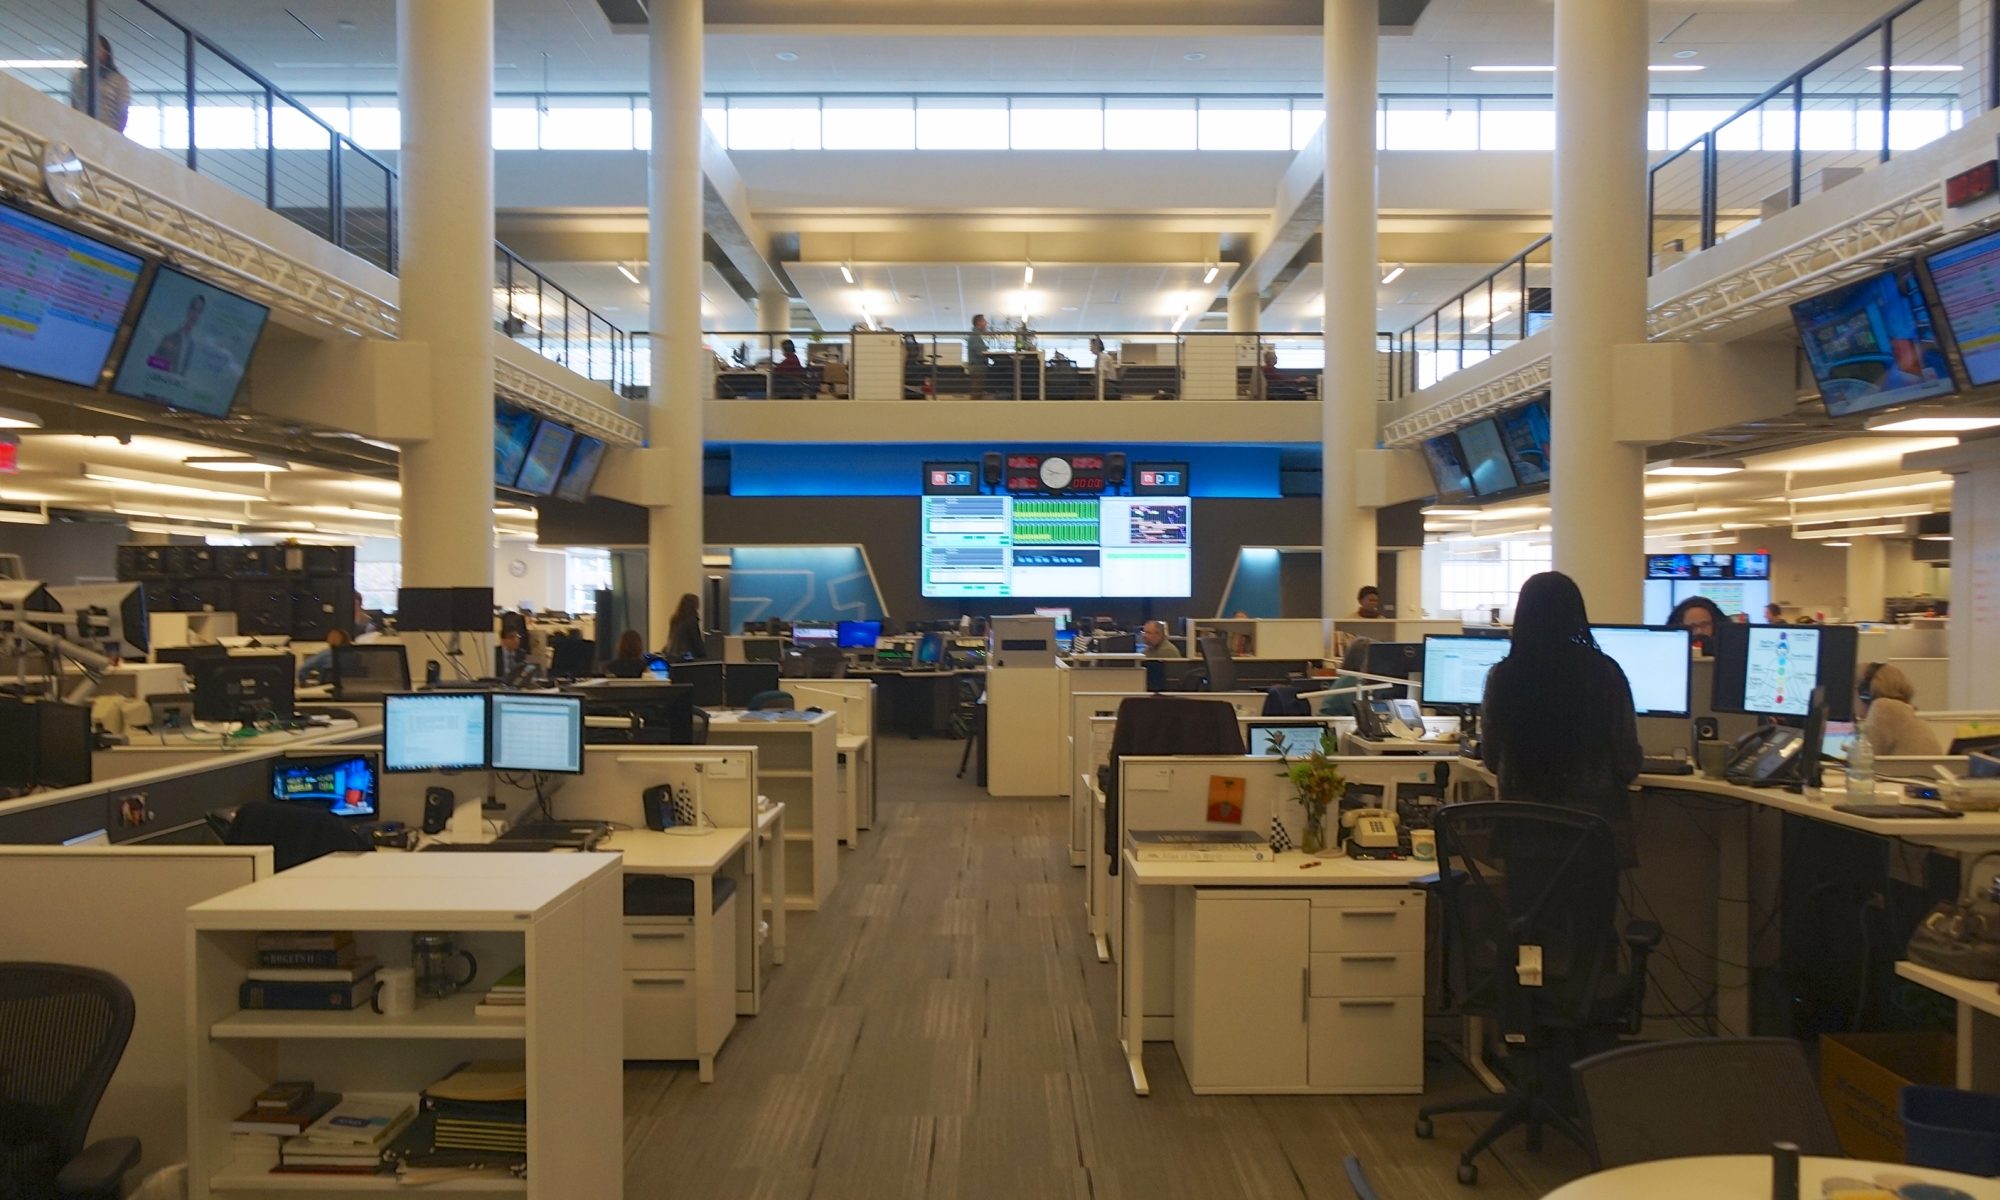 Inside view of the NPR newsroom